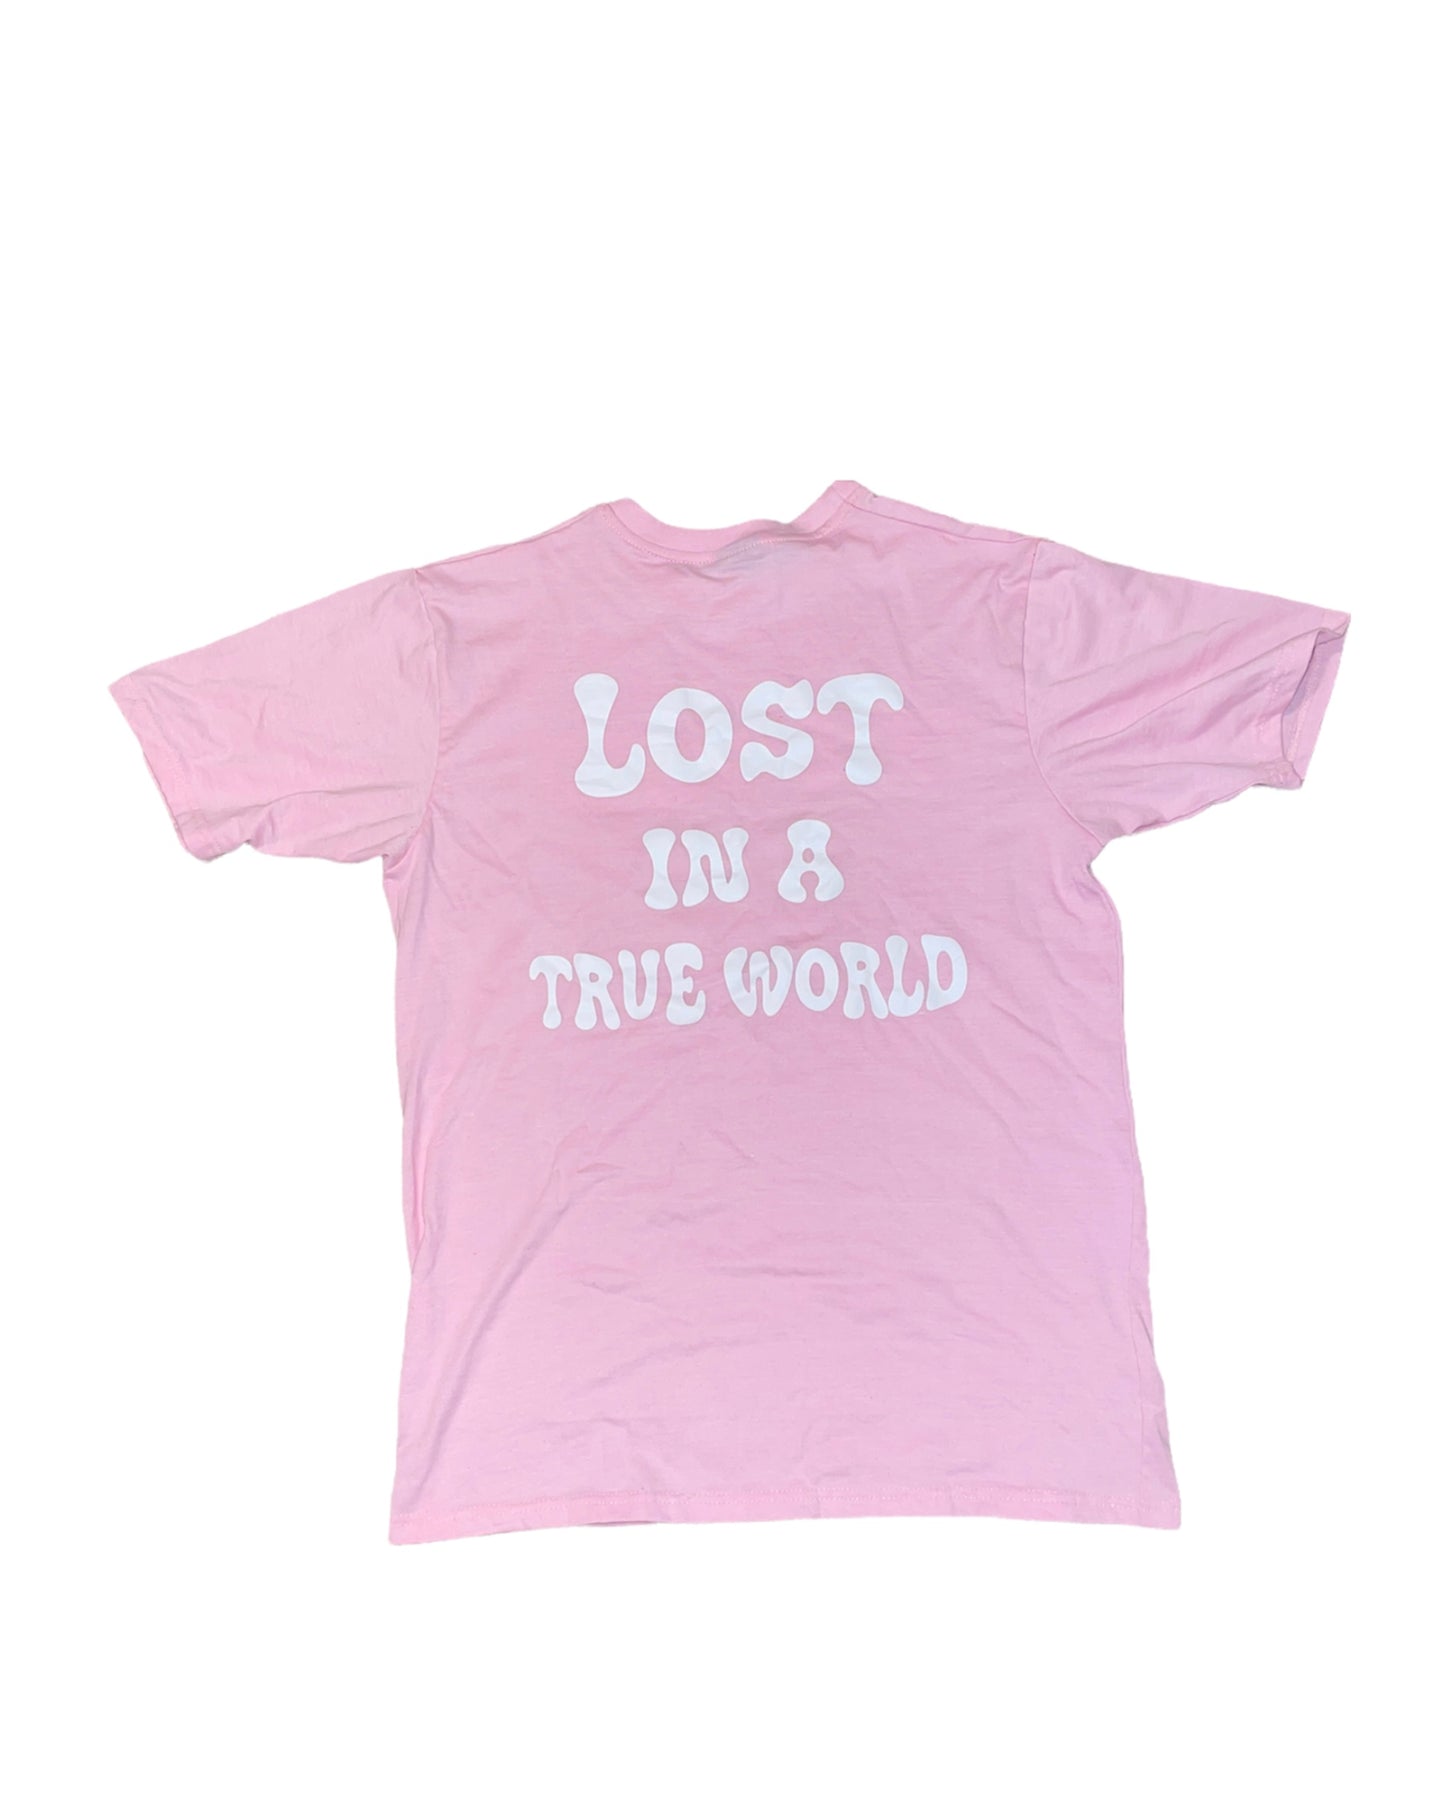 “Lost In A True World” Tee